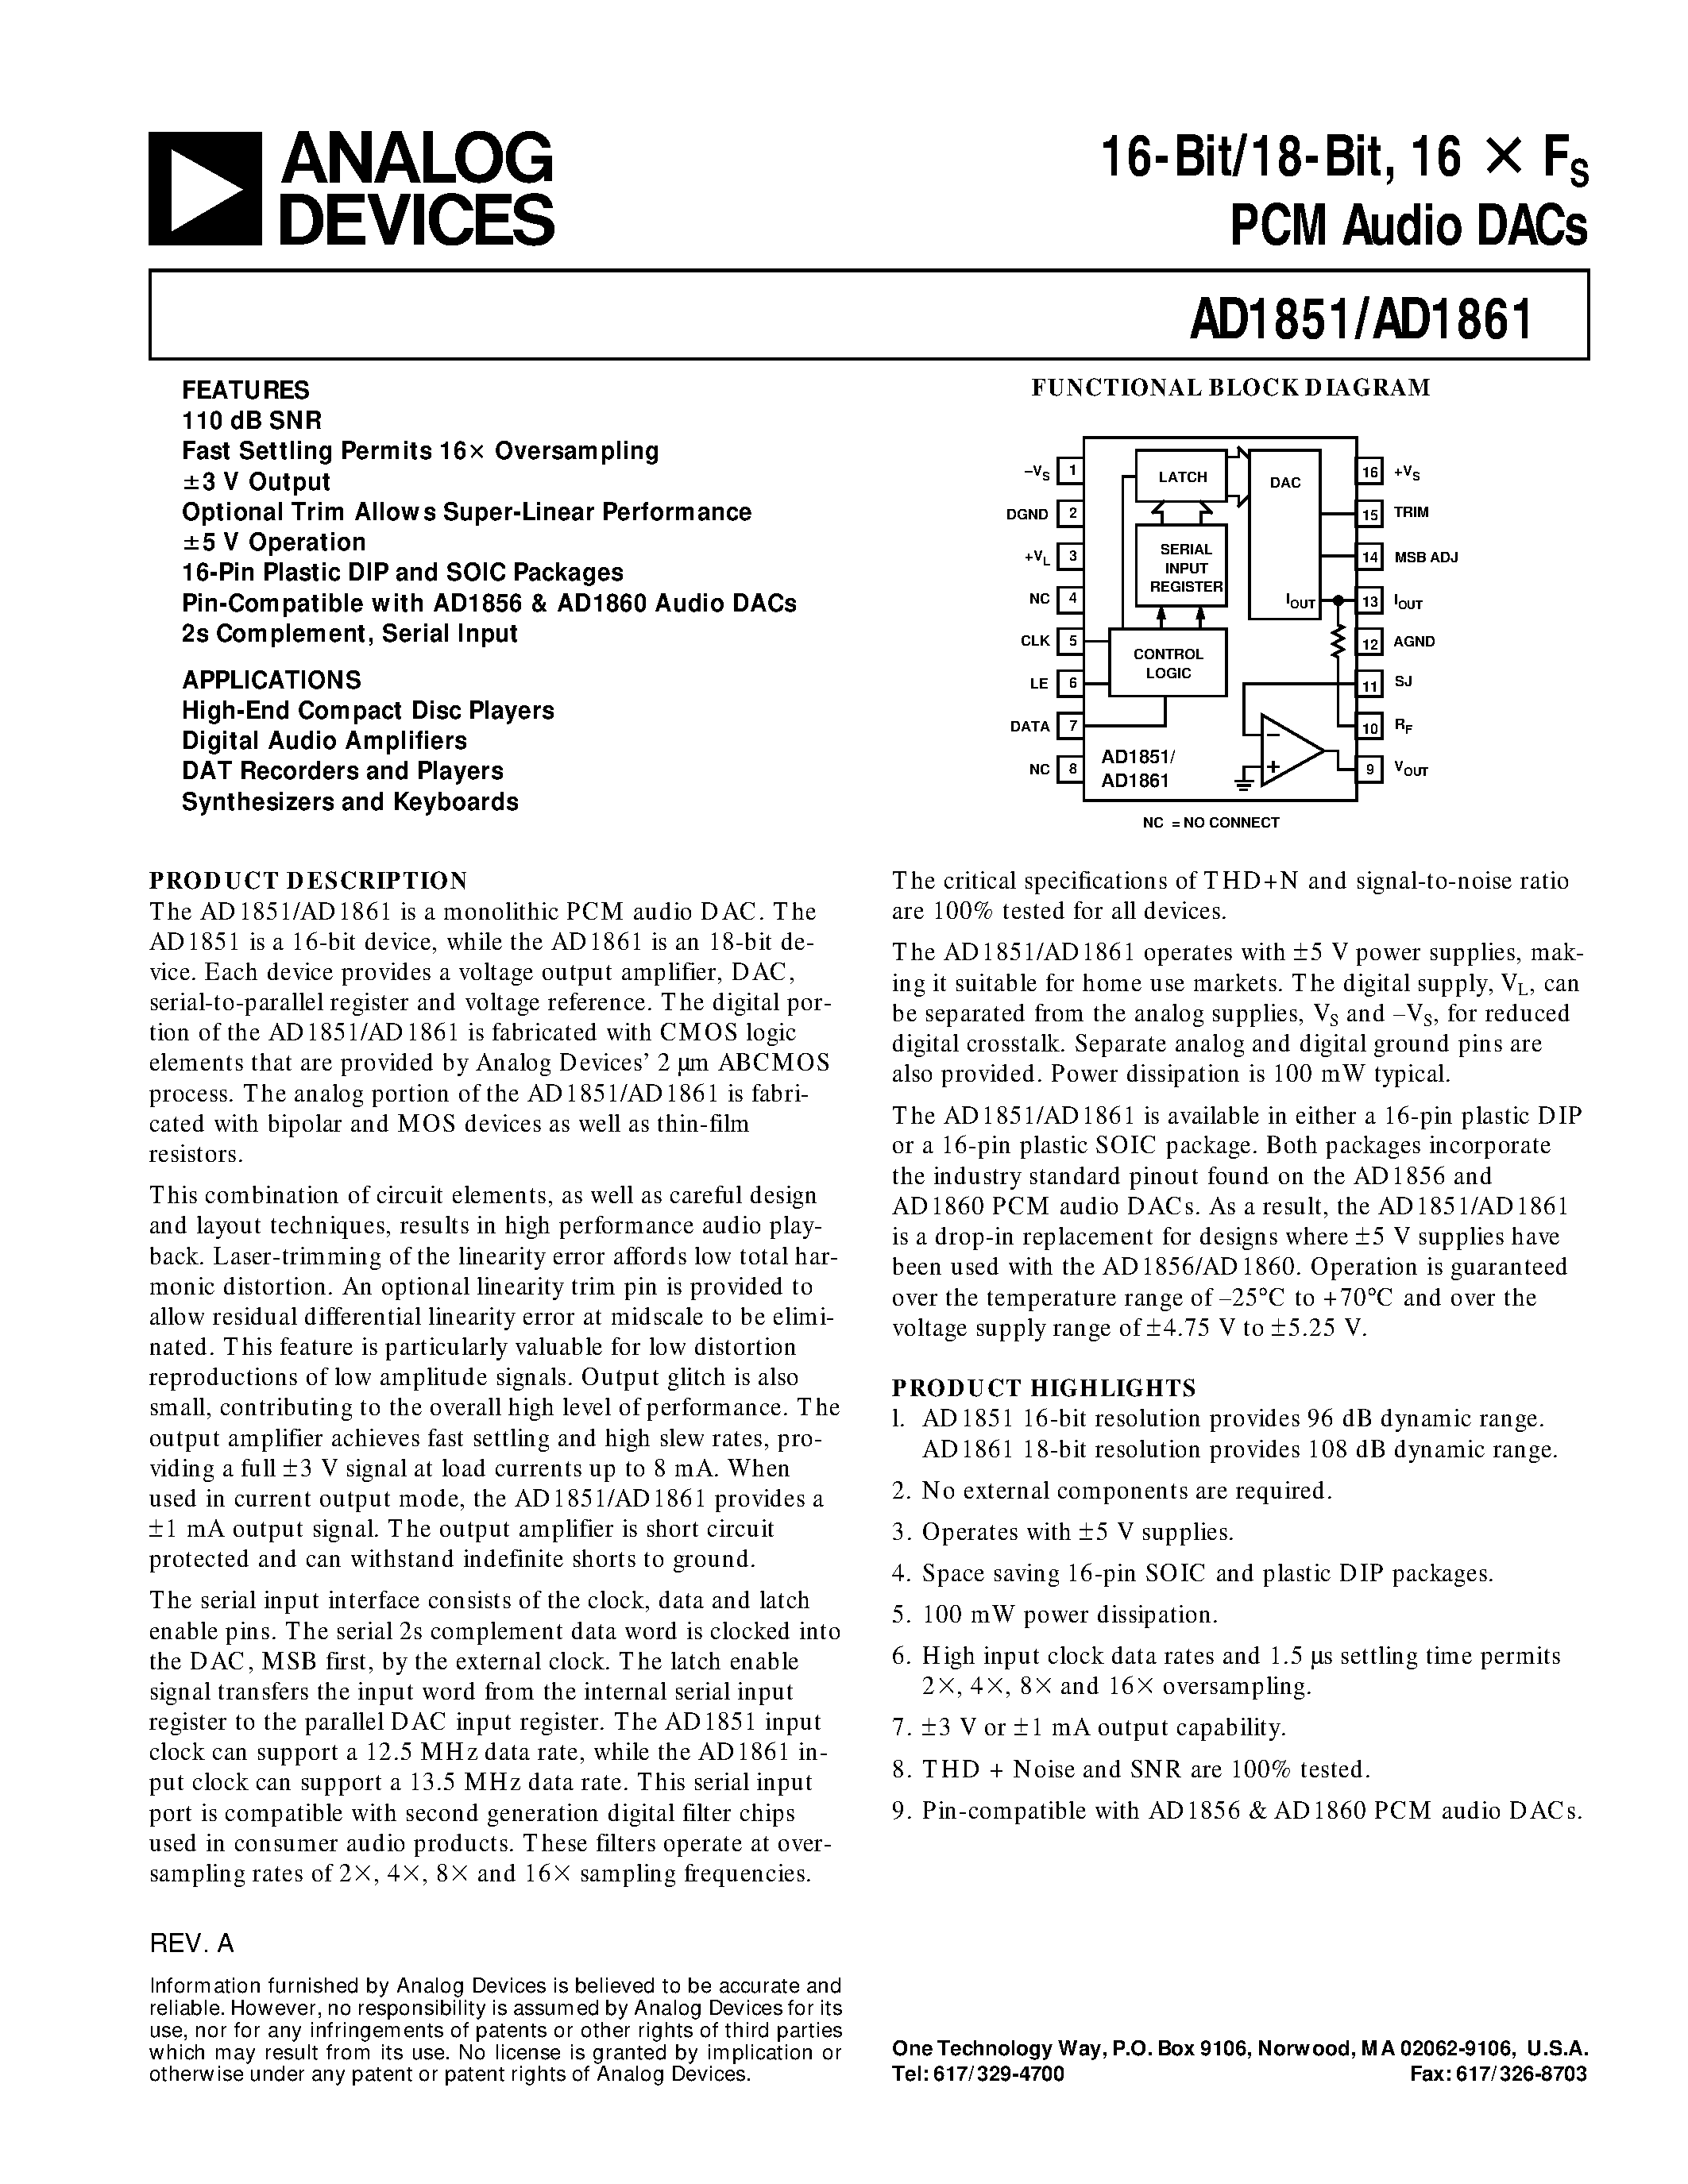 Datasheet AD1861R-J - 16-Bit/18-Bit/ 16 X Fs PCM Audio DACs page 1